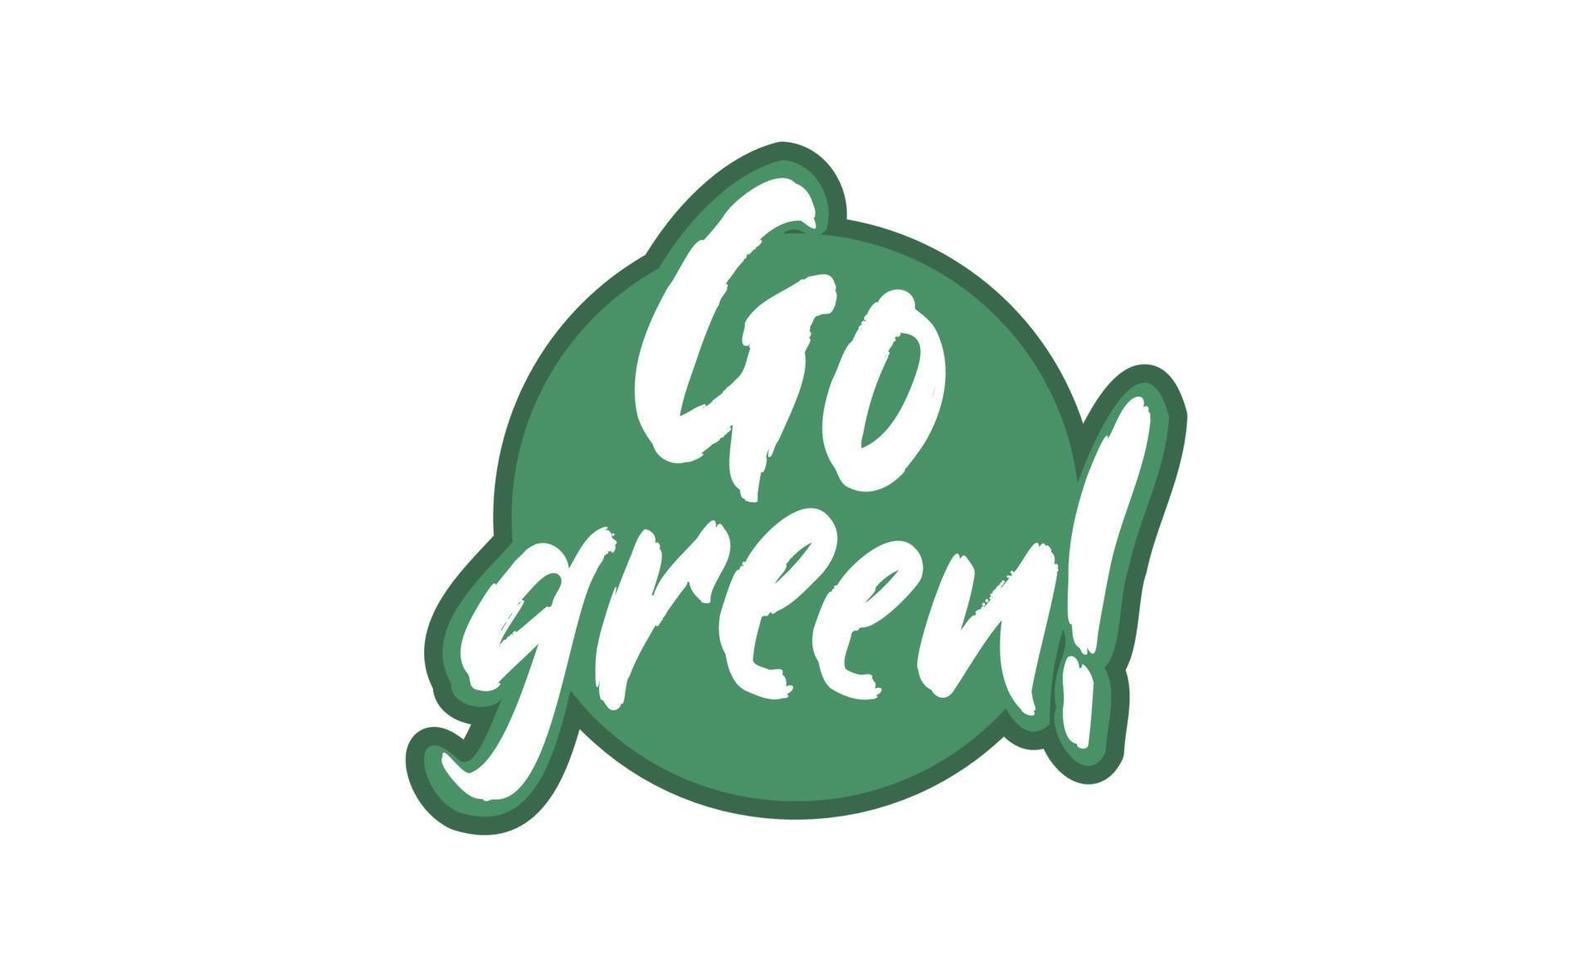 Go Green badge. Eco-friendly slogan. Badge pin with environmental awareness message. vector